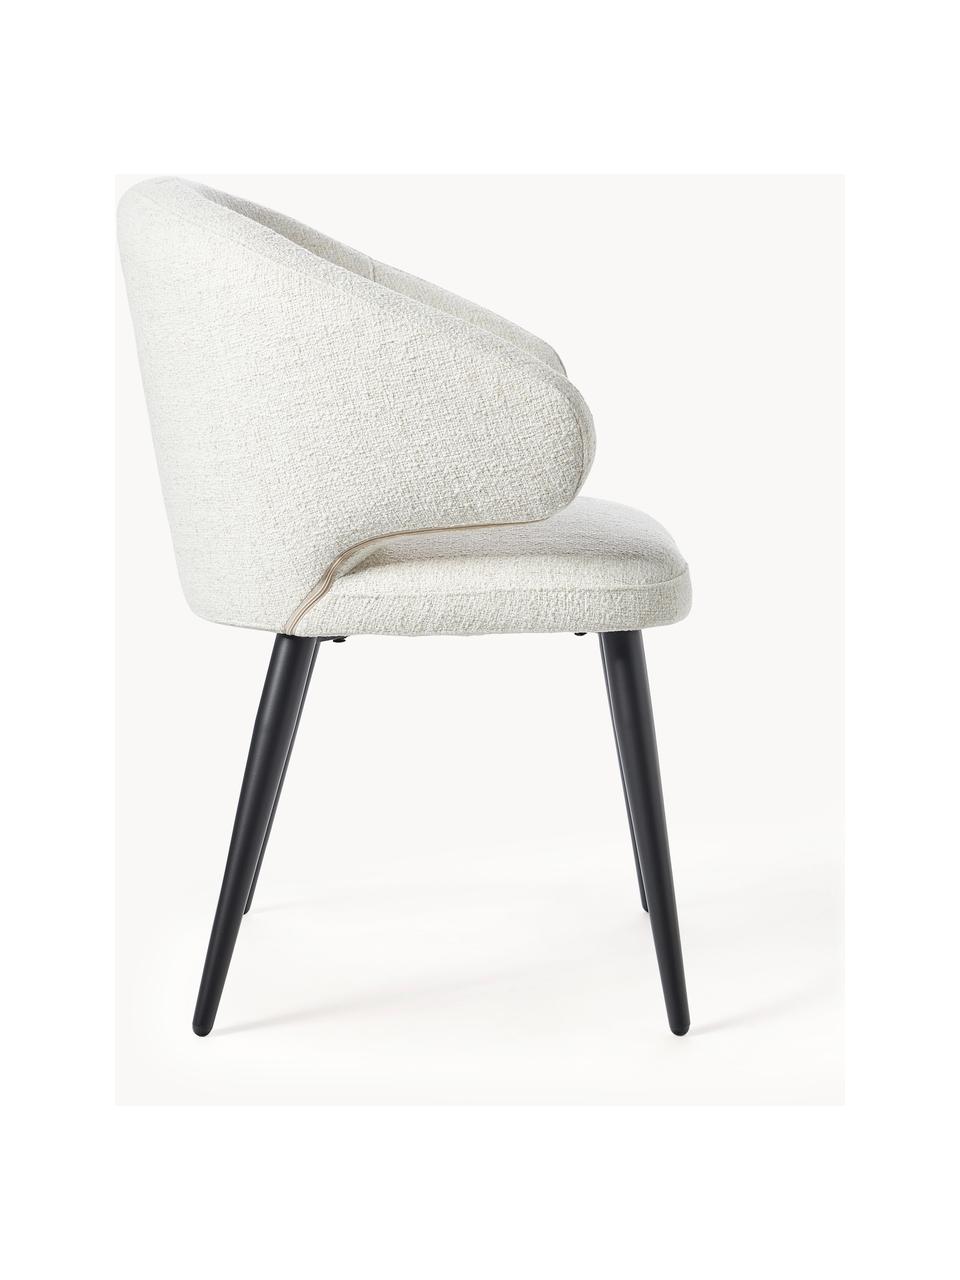 Buklé stolička s opierkami Celia, Buklé krémovobiela, Š 60 x V 79 cm